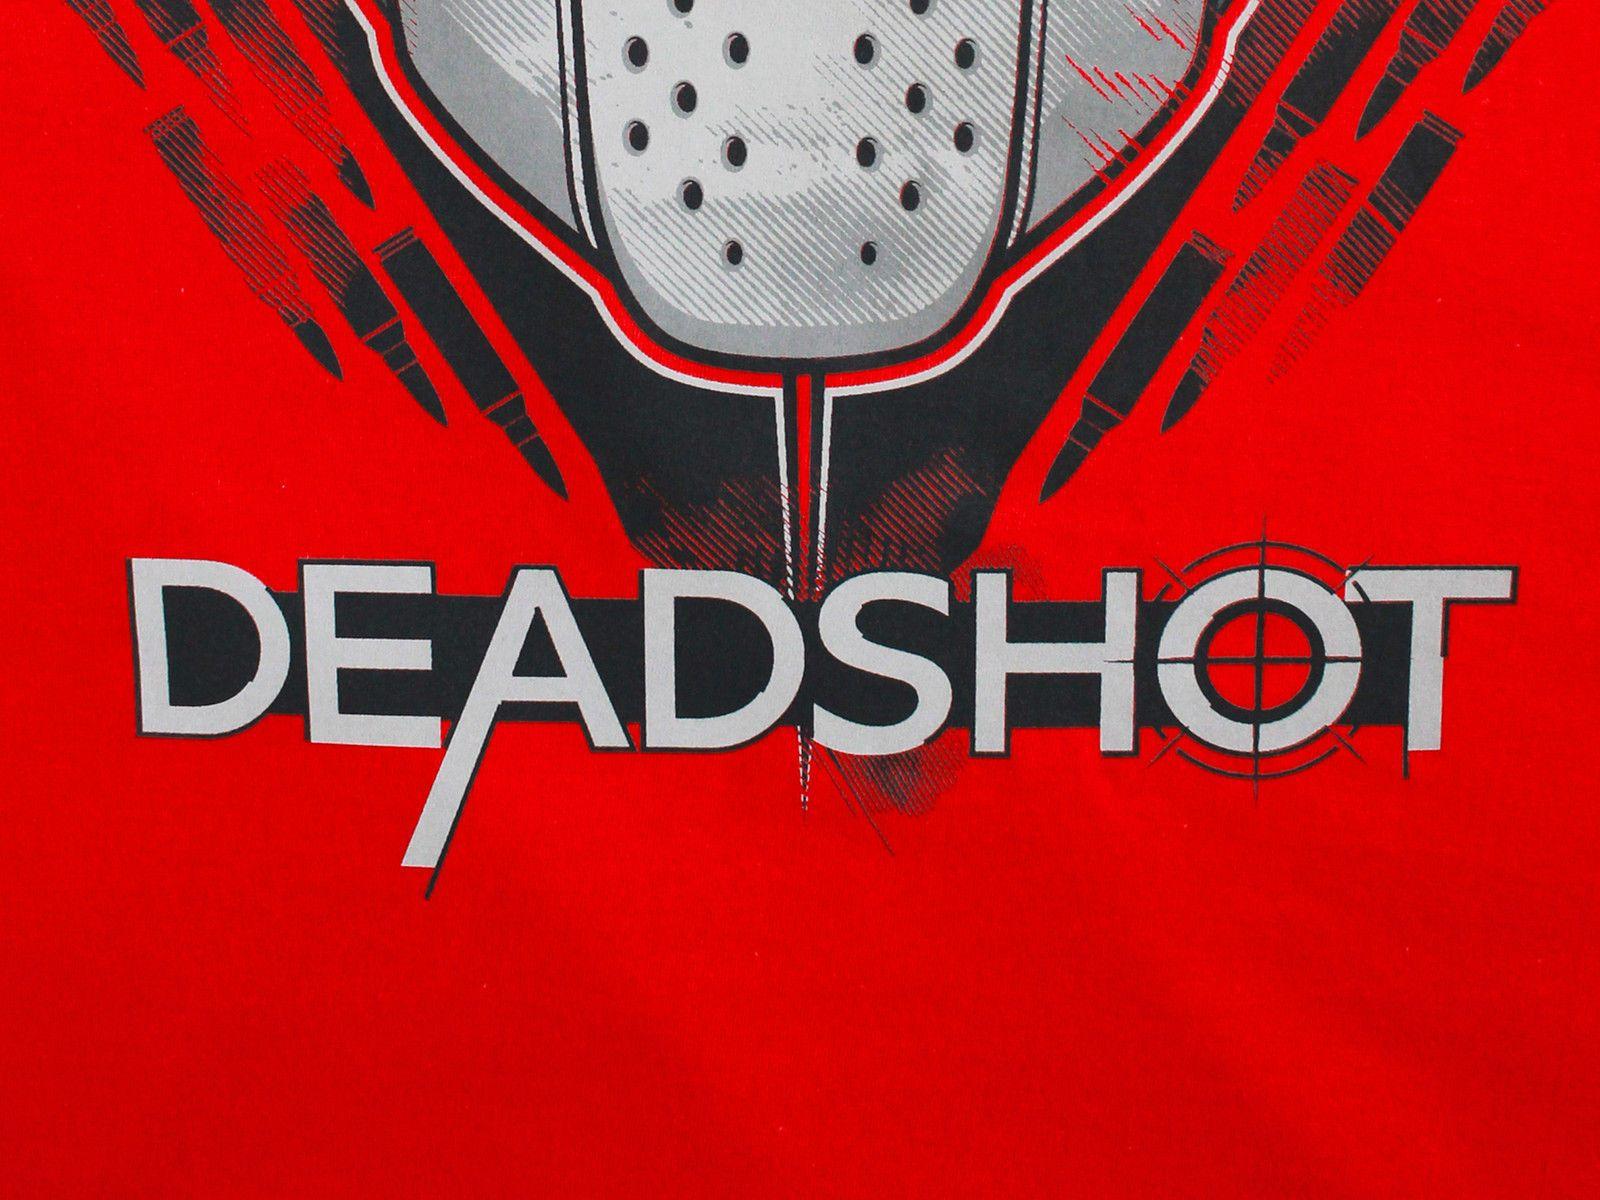 Deadshot Logo - Deadshot Alt Logo Fonts?